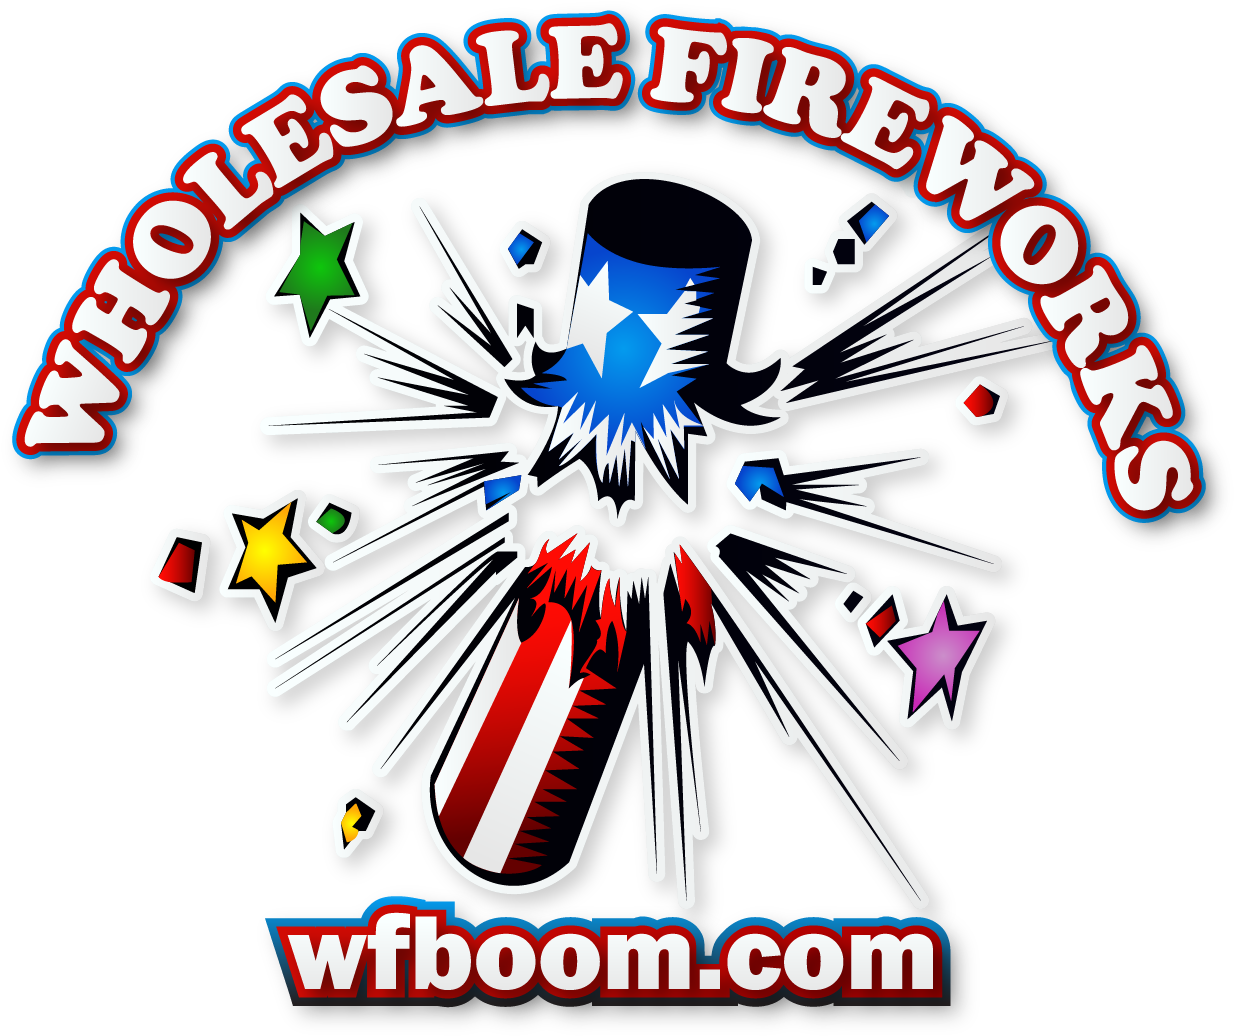 Wholesale Fireworks - Firecracker (1250x1250)